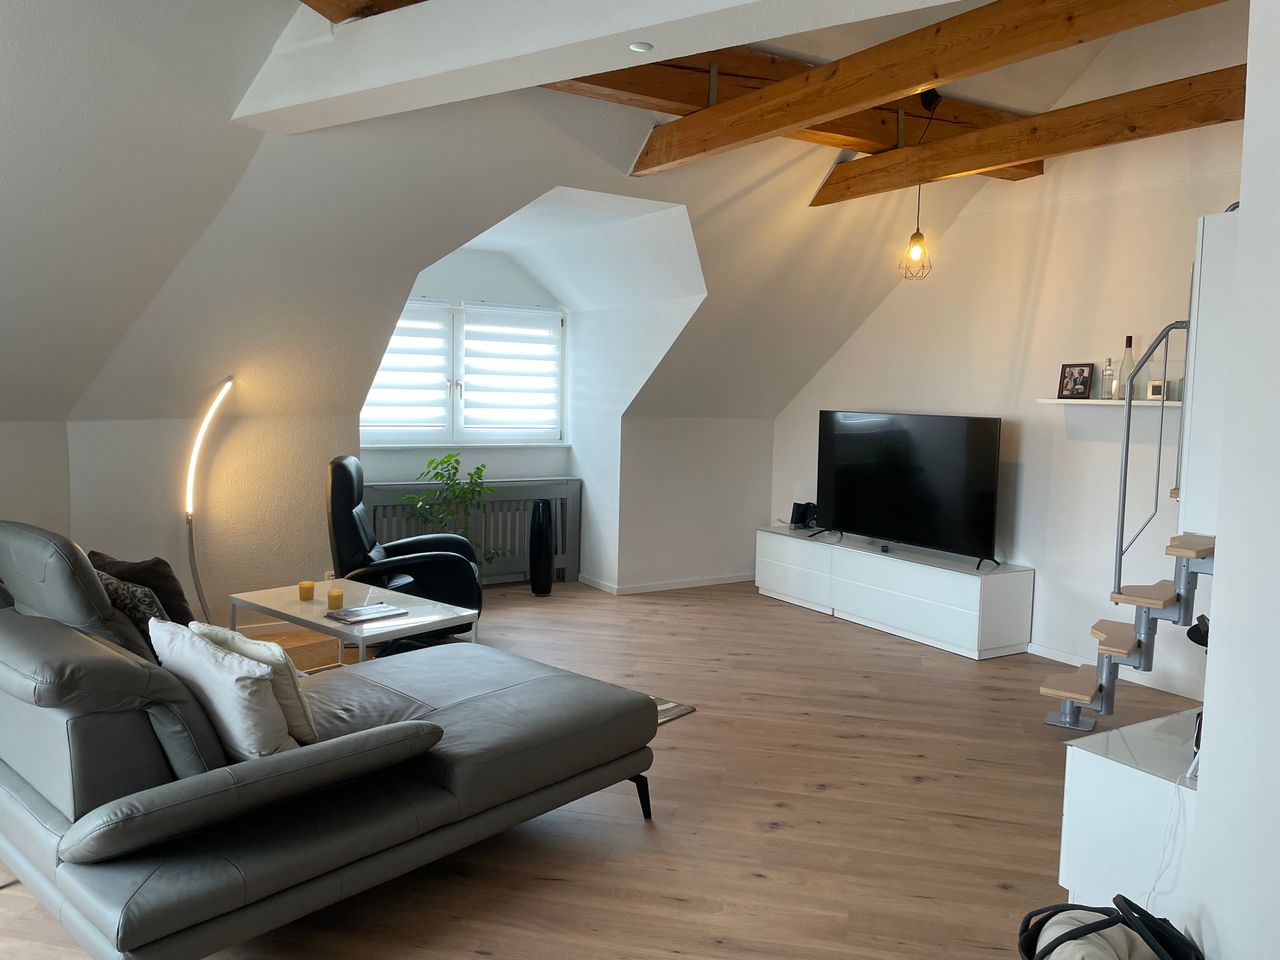 Modern, charming suite close to city center of Neuss-Grimmlinghausen